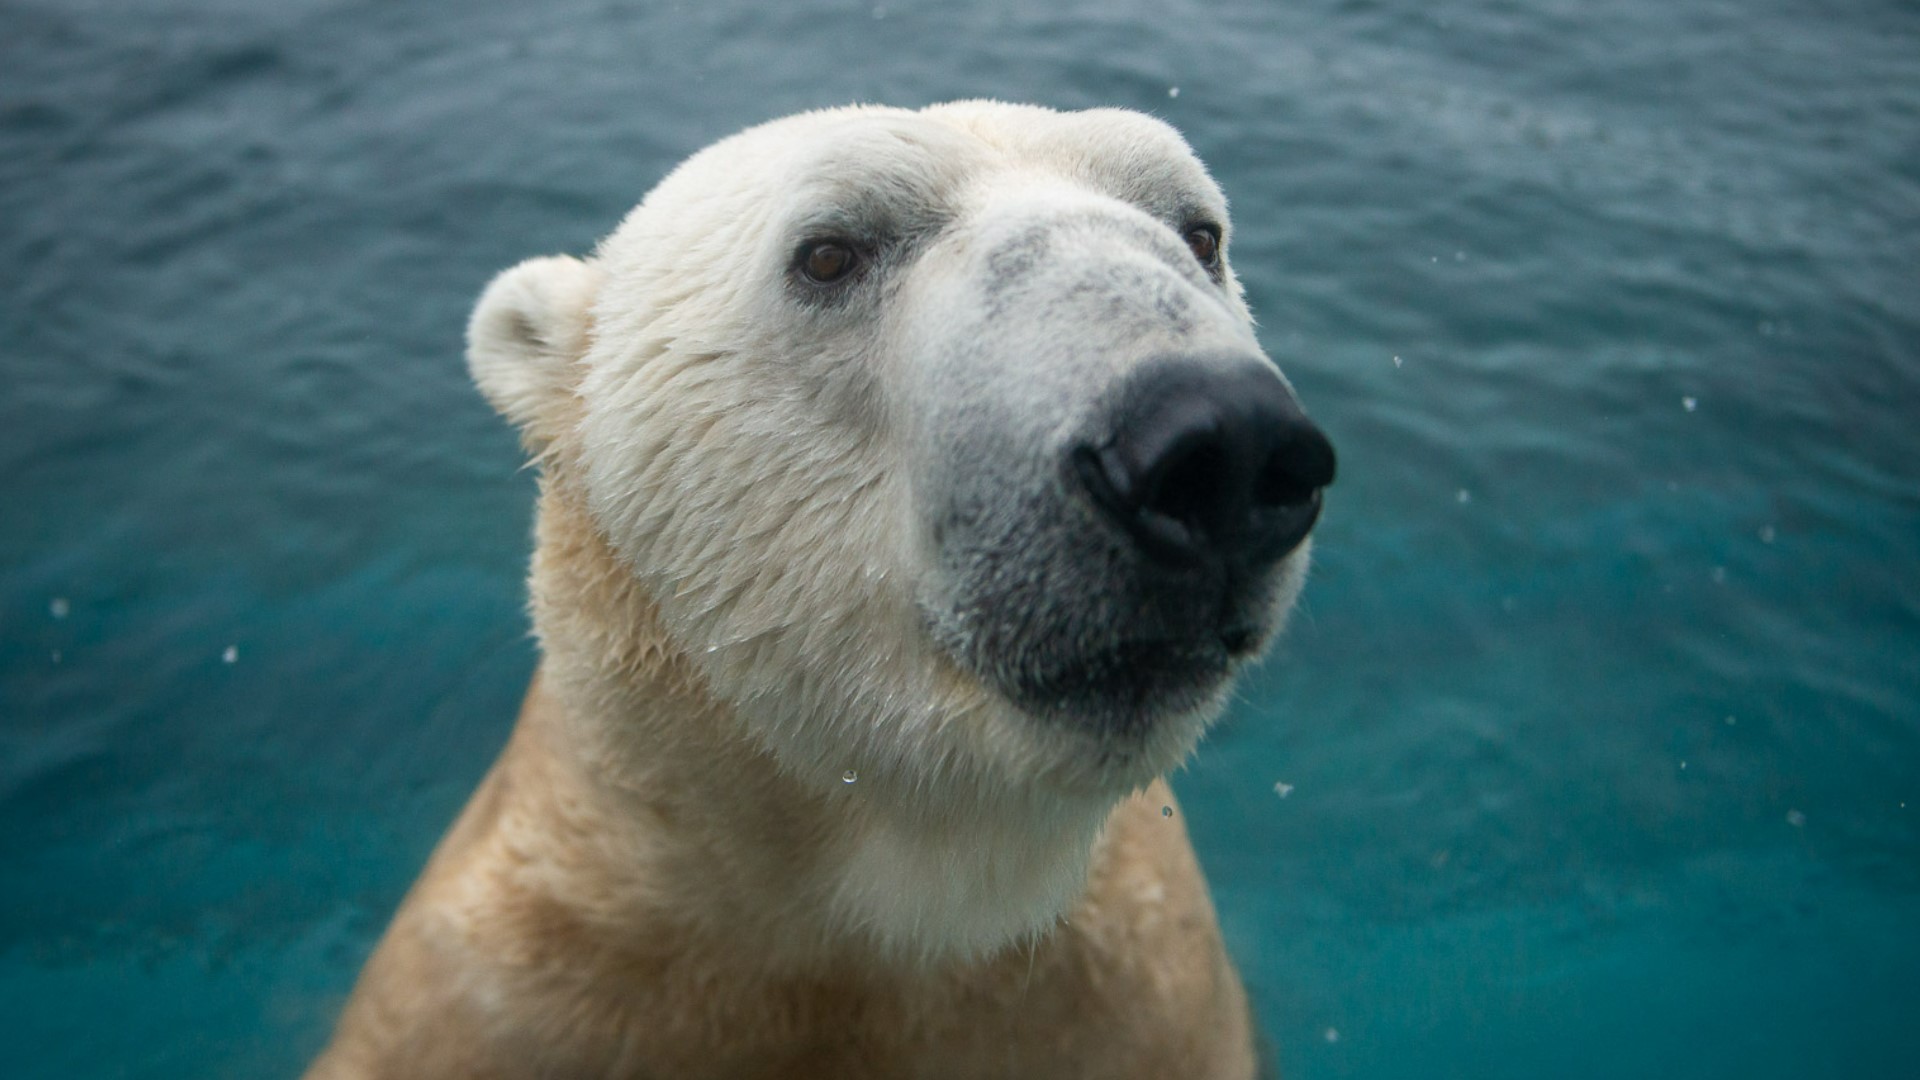 Columbus Zoo welcomes back Lee the polar bear